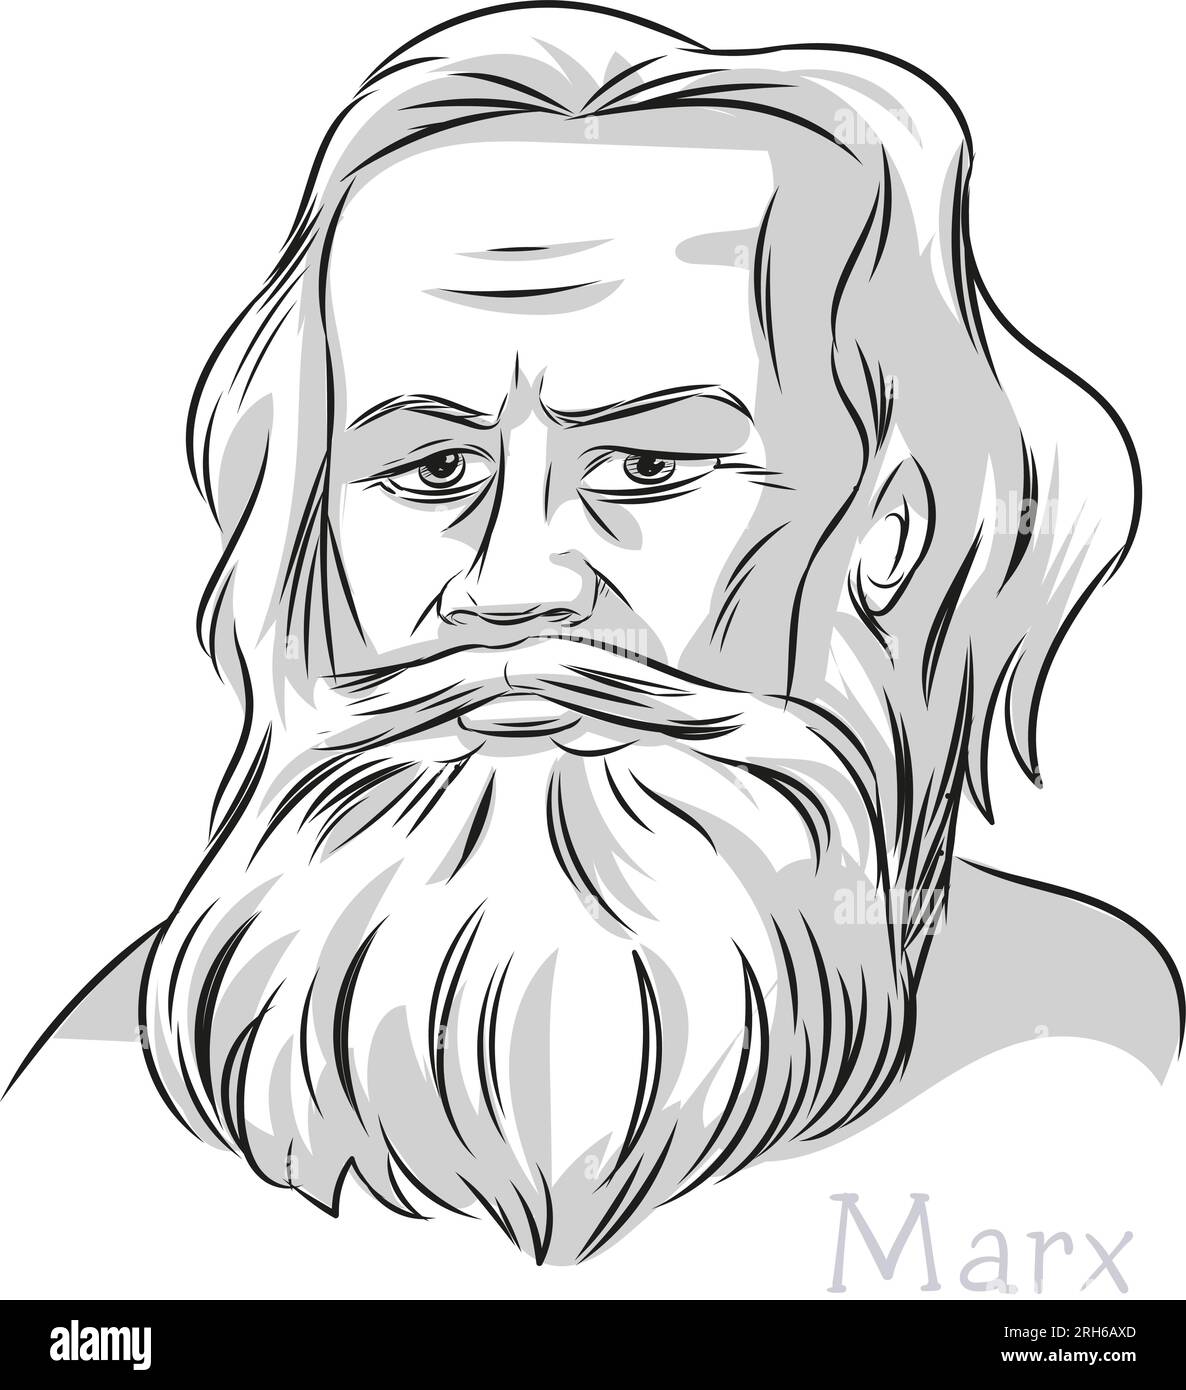 karl marx Philosopher Hand drawn line art Portrait Illustration Stock Vector